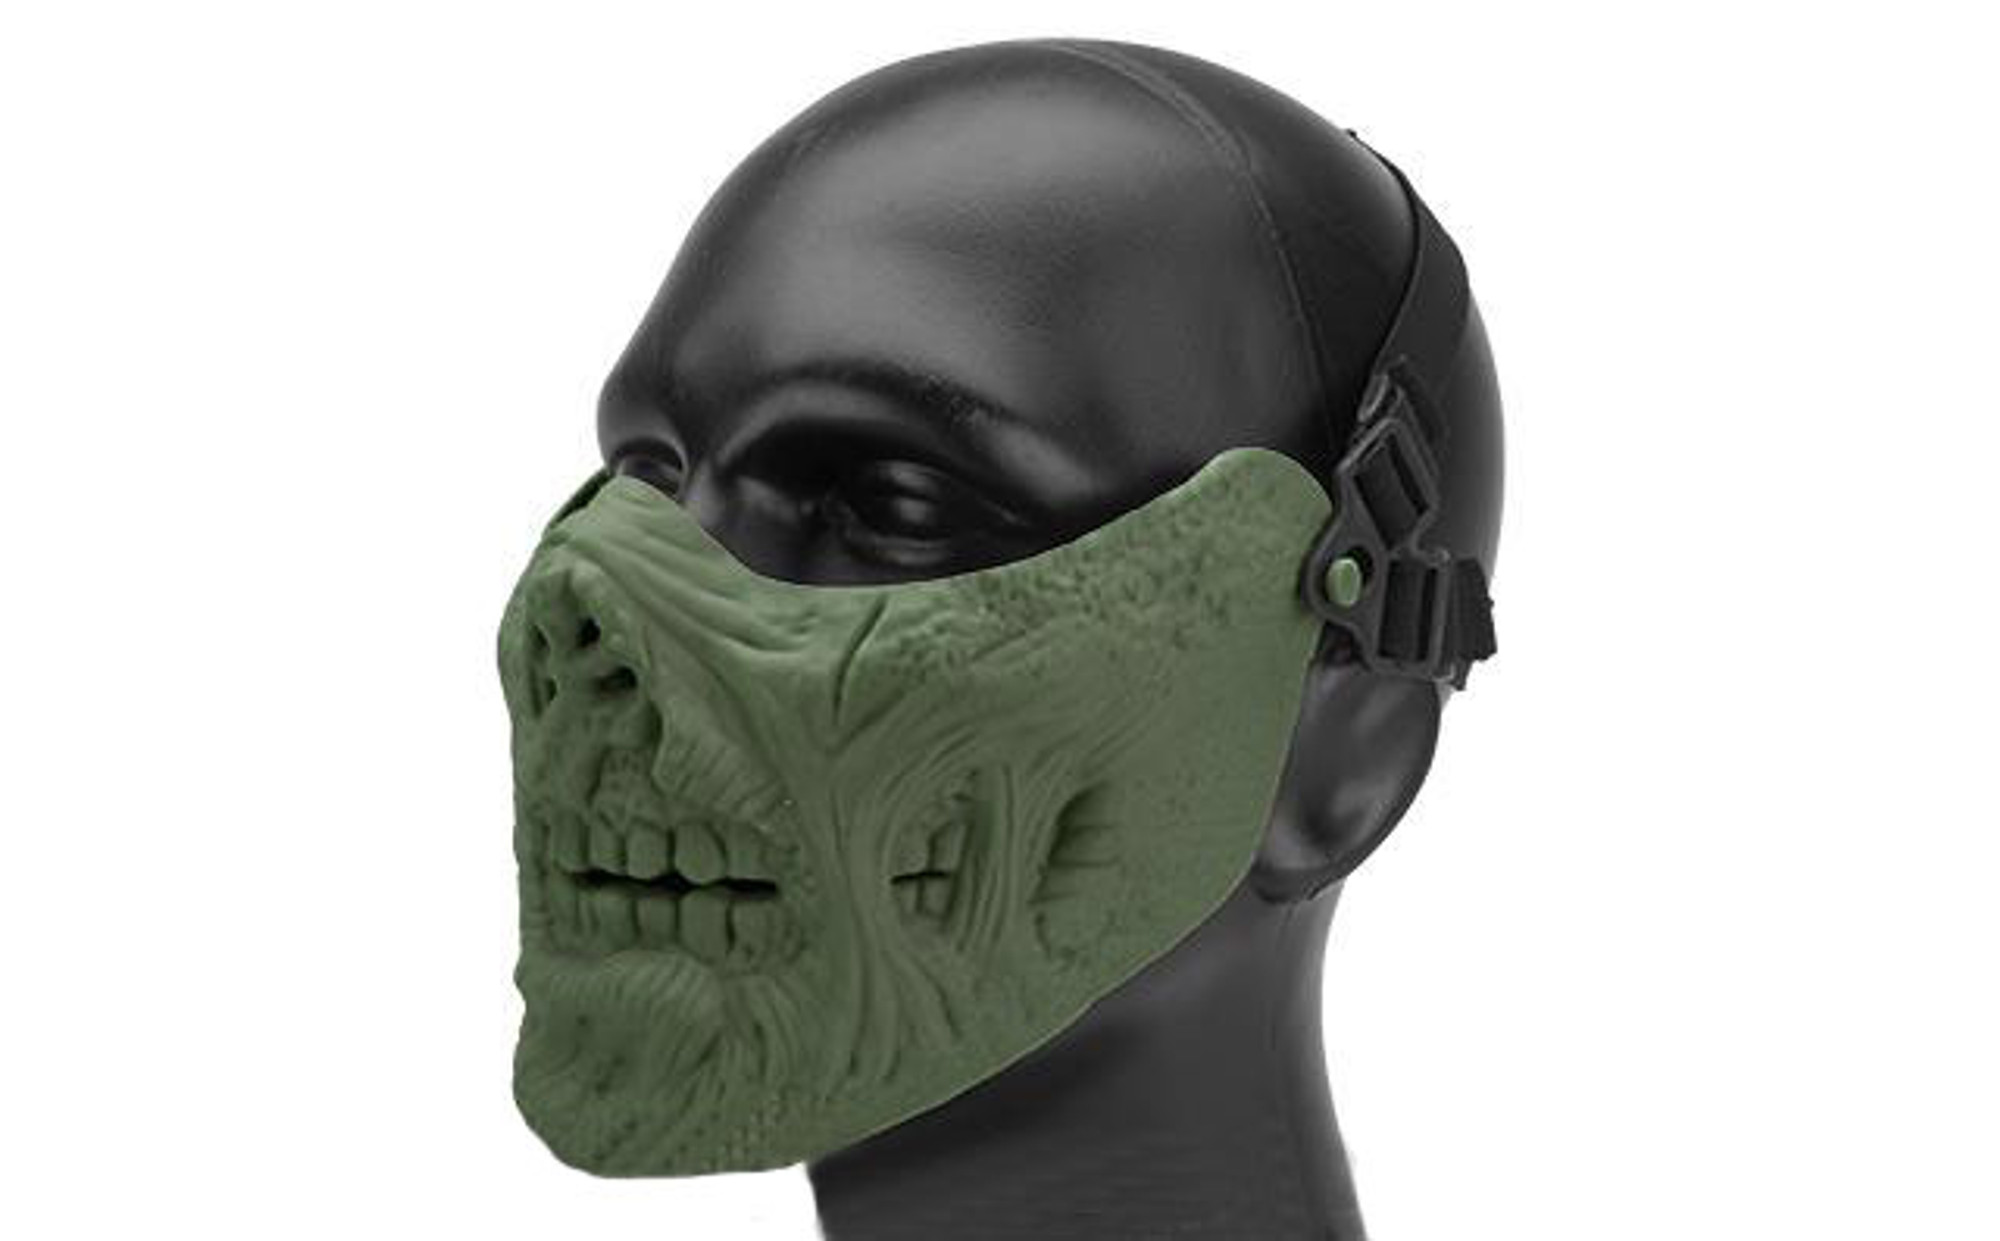 6mmProShop "Zombie" Iron Face Lower Half Mask - OD Green